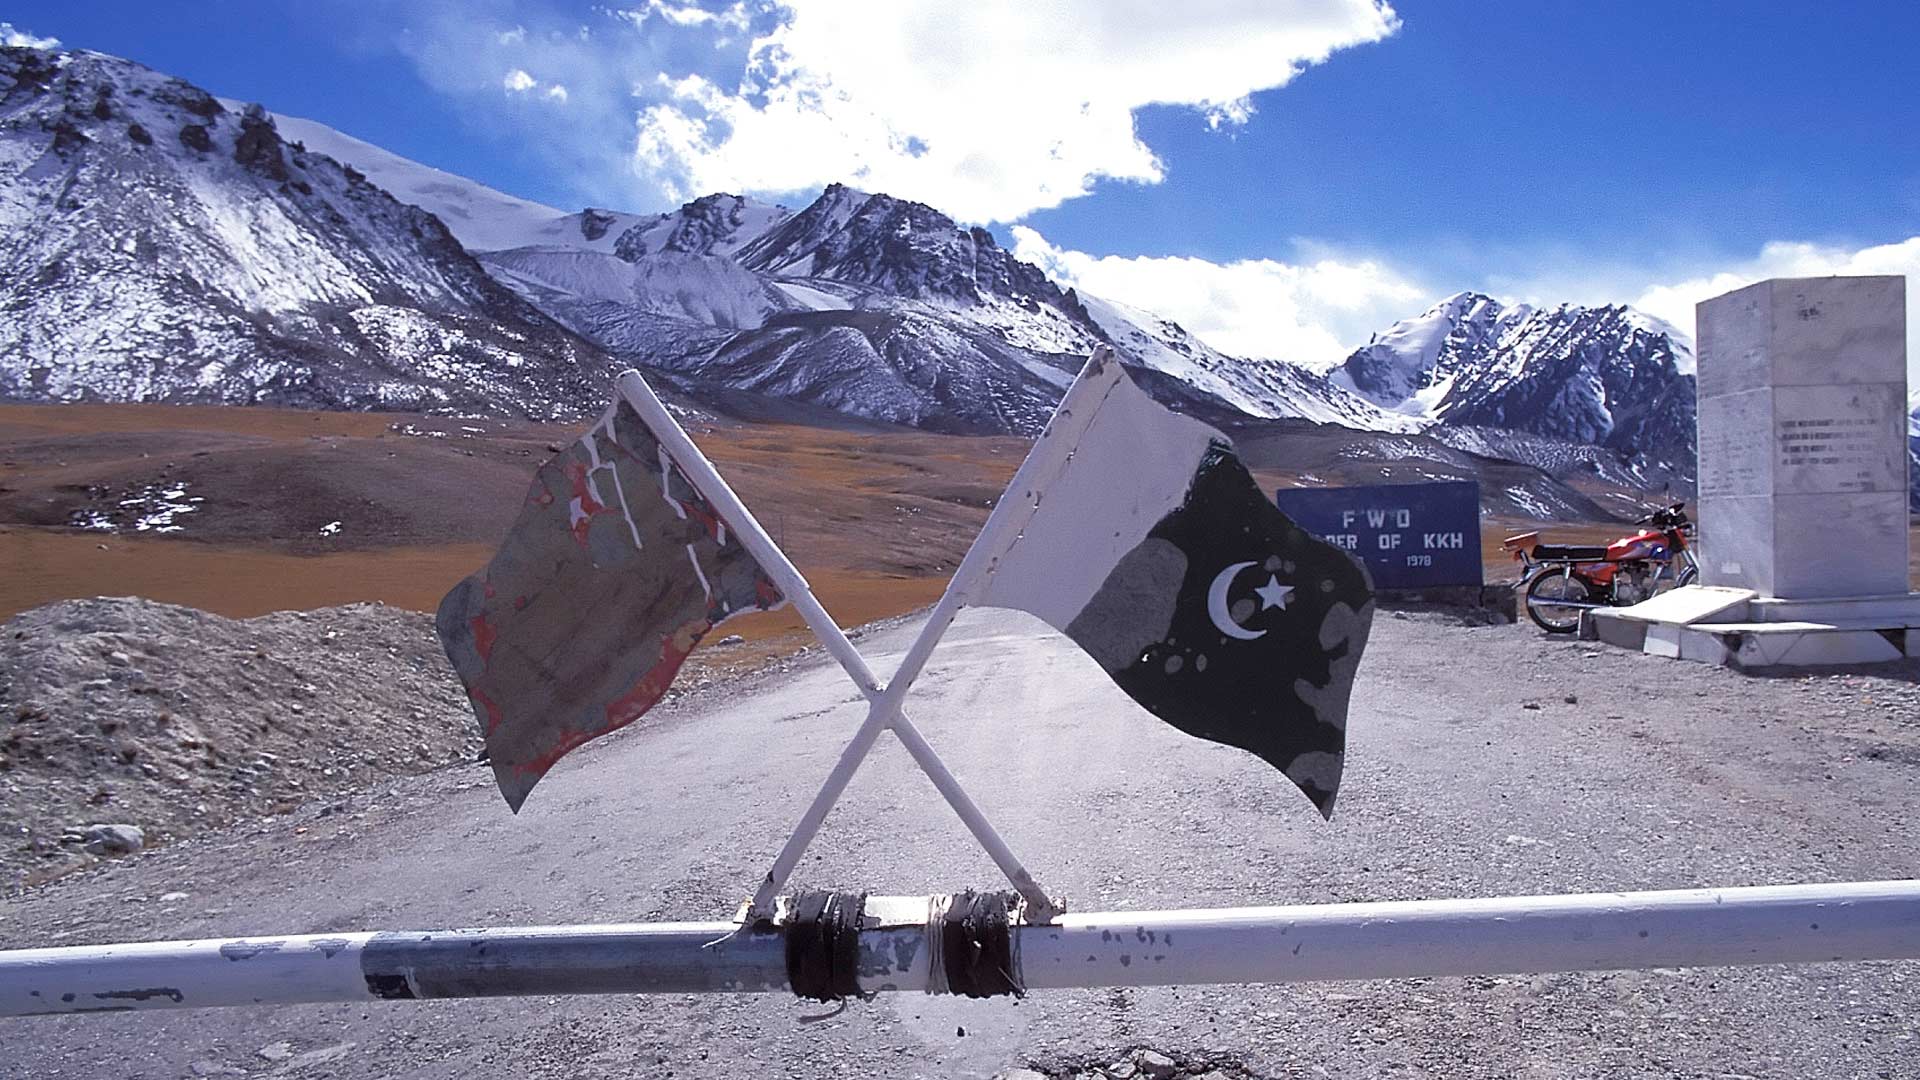 Border between Pakistan and China, Khunjerab Pass, Northern Areas, Pakistan